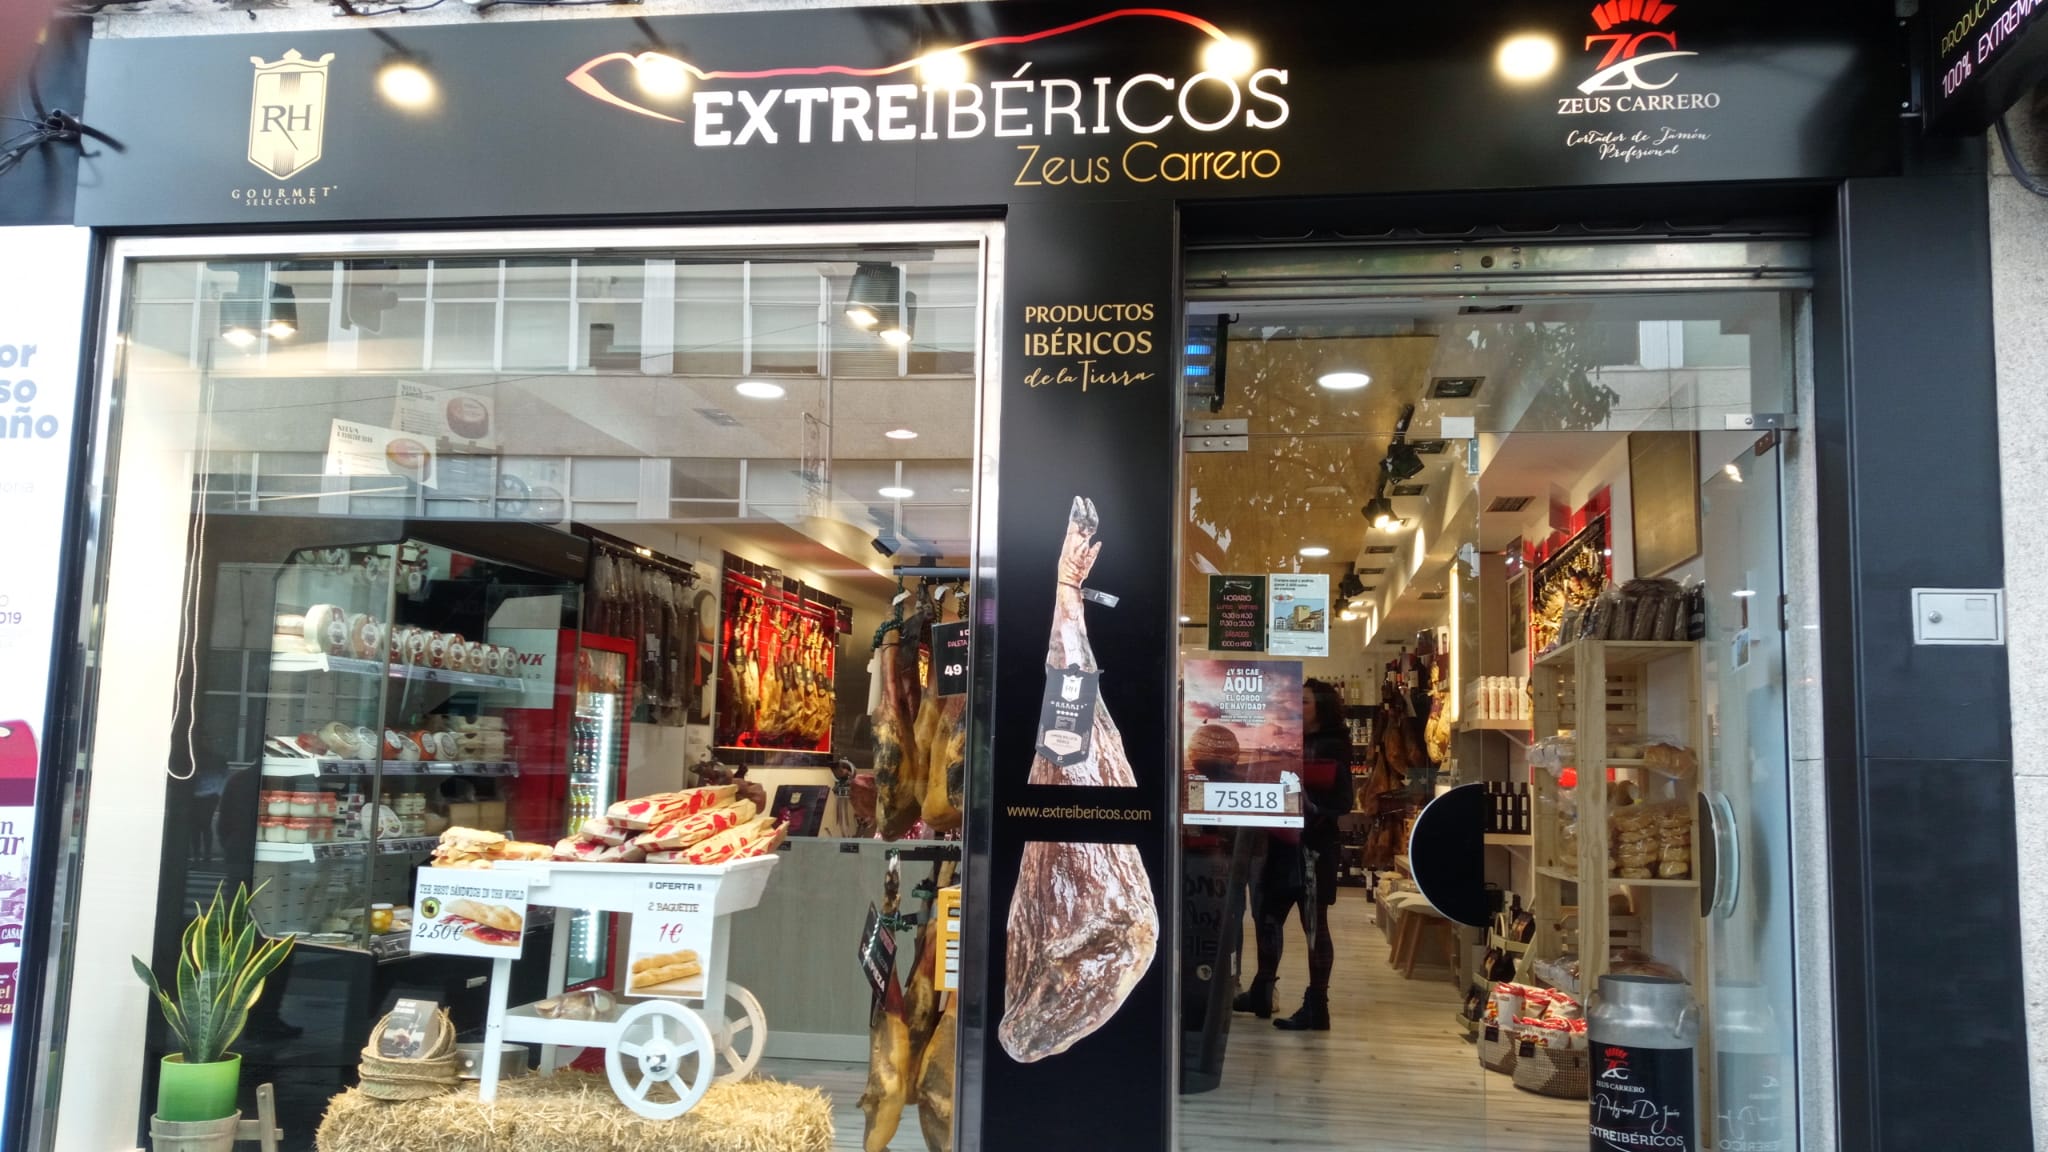 Productos Extremeños en Cáceres Extreibericos